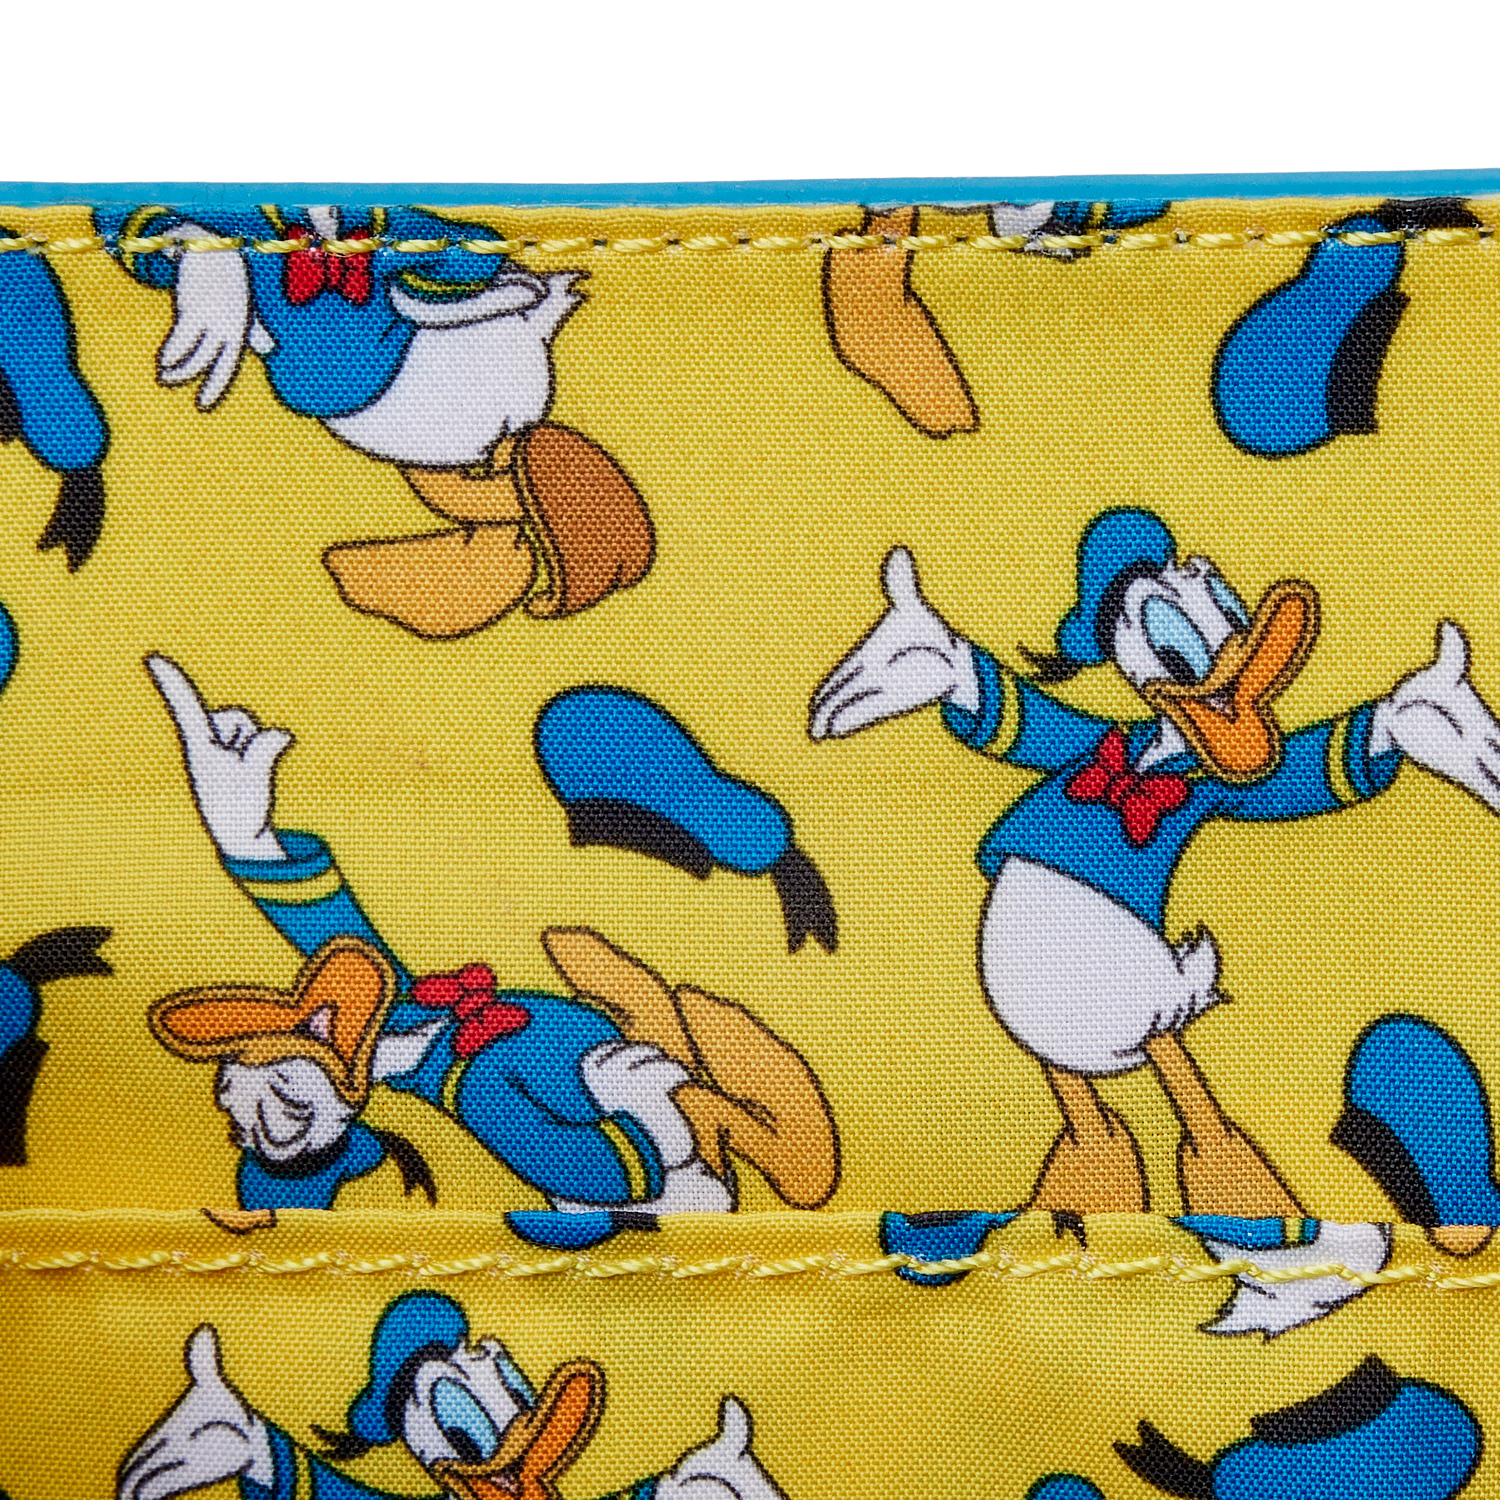 Loungefly Disney Donald Duck Cosplay Crossbody Bag